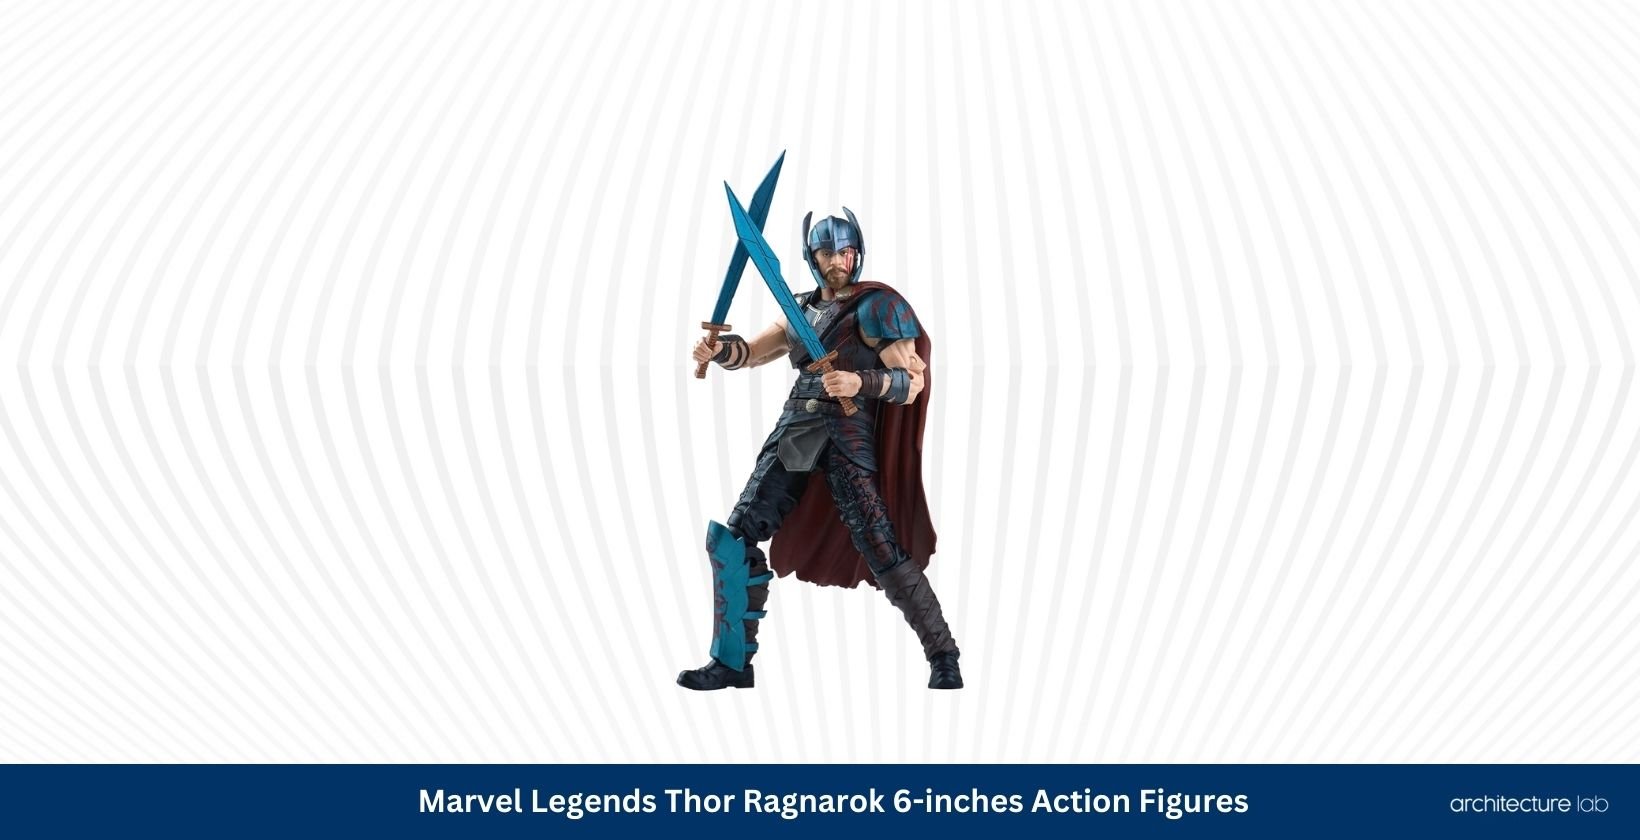 Marvel legends thor ragnarok 6 inches action figures